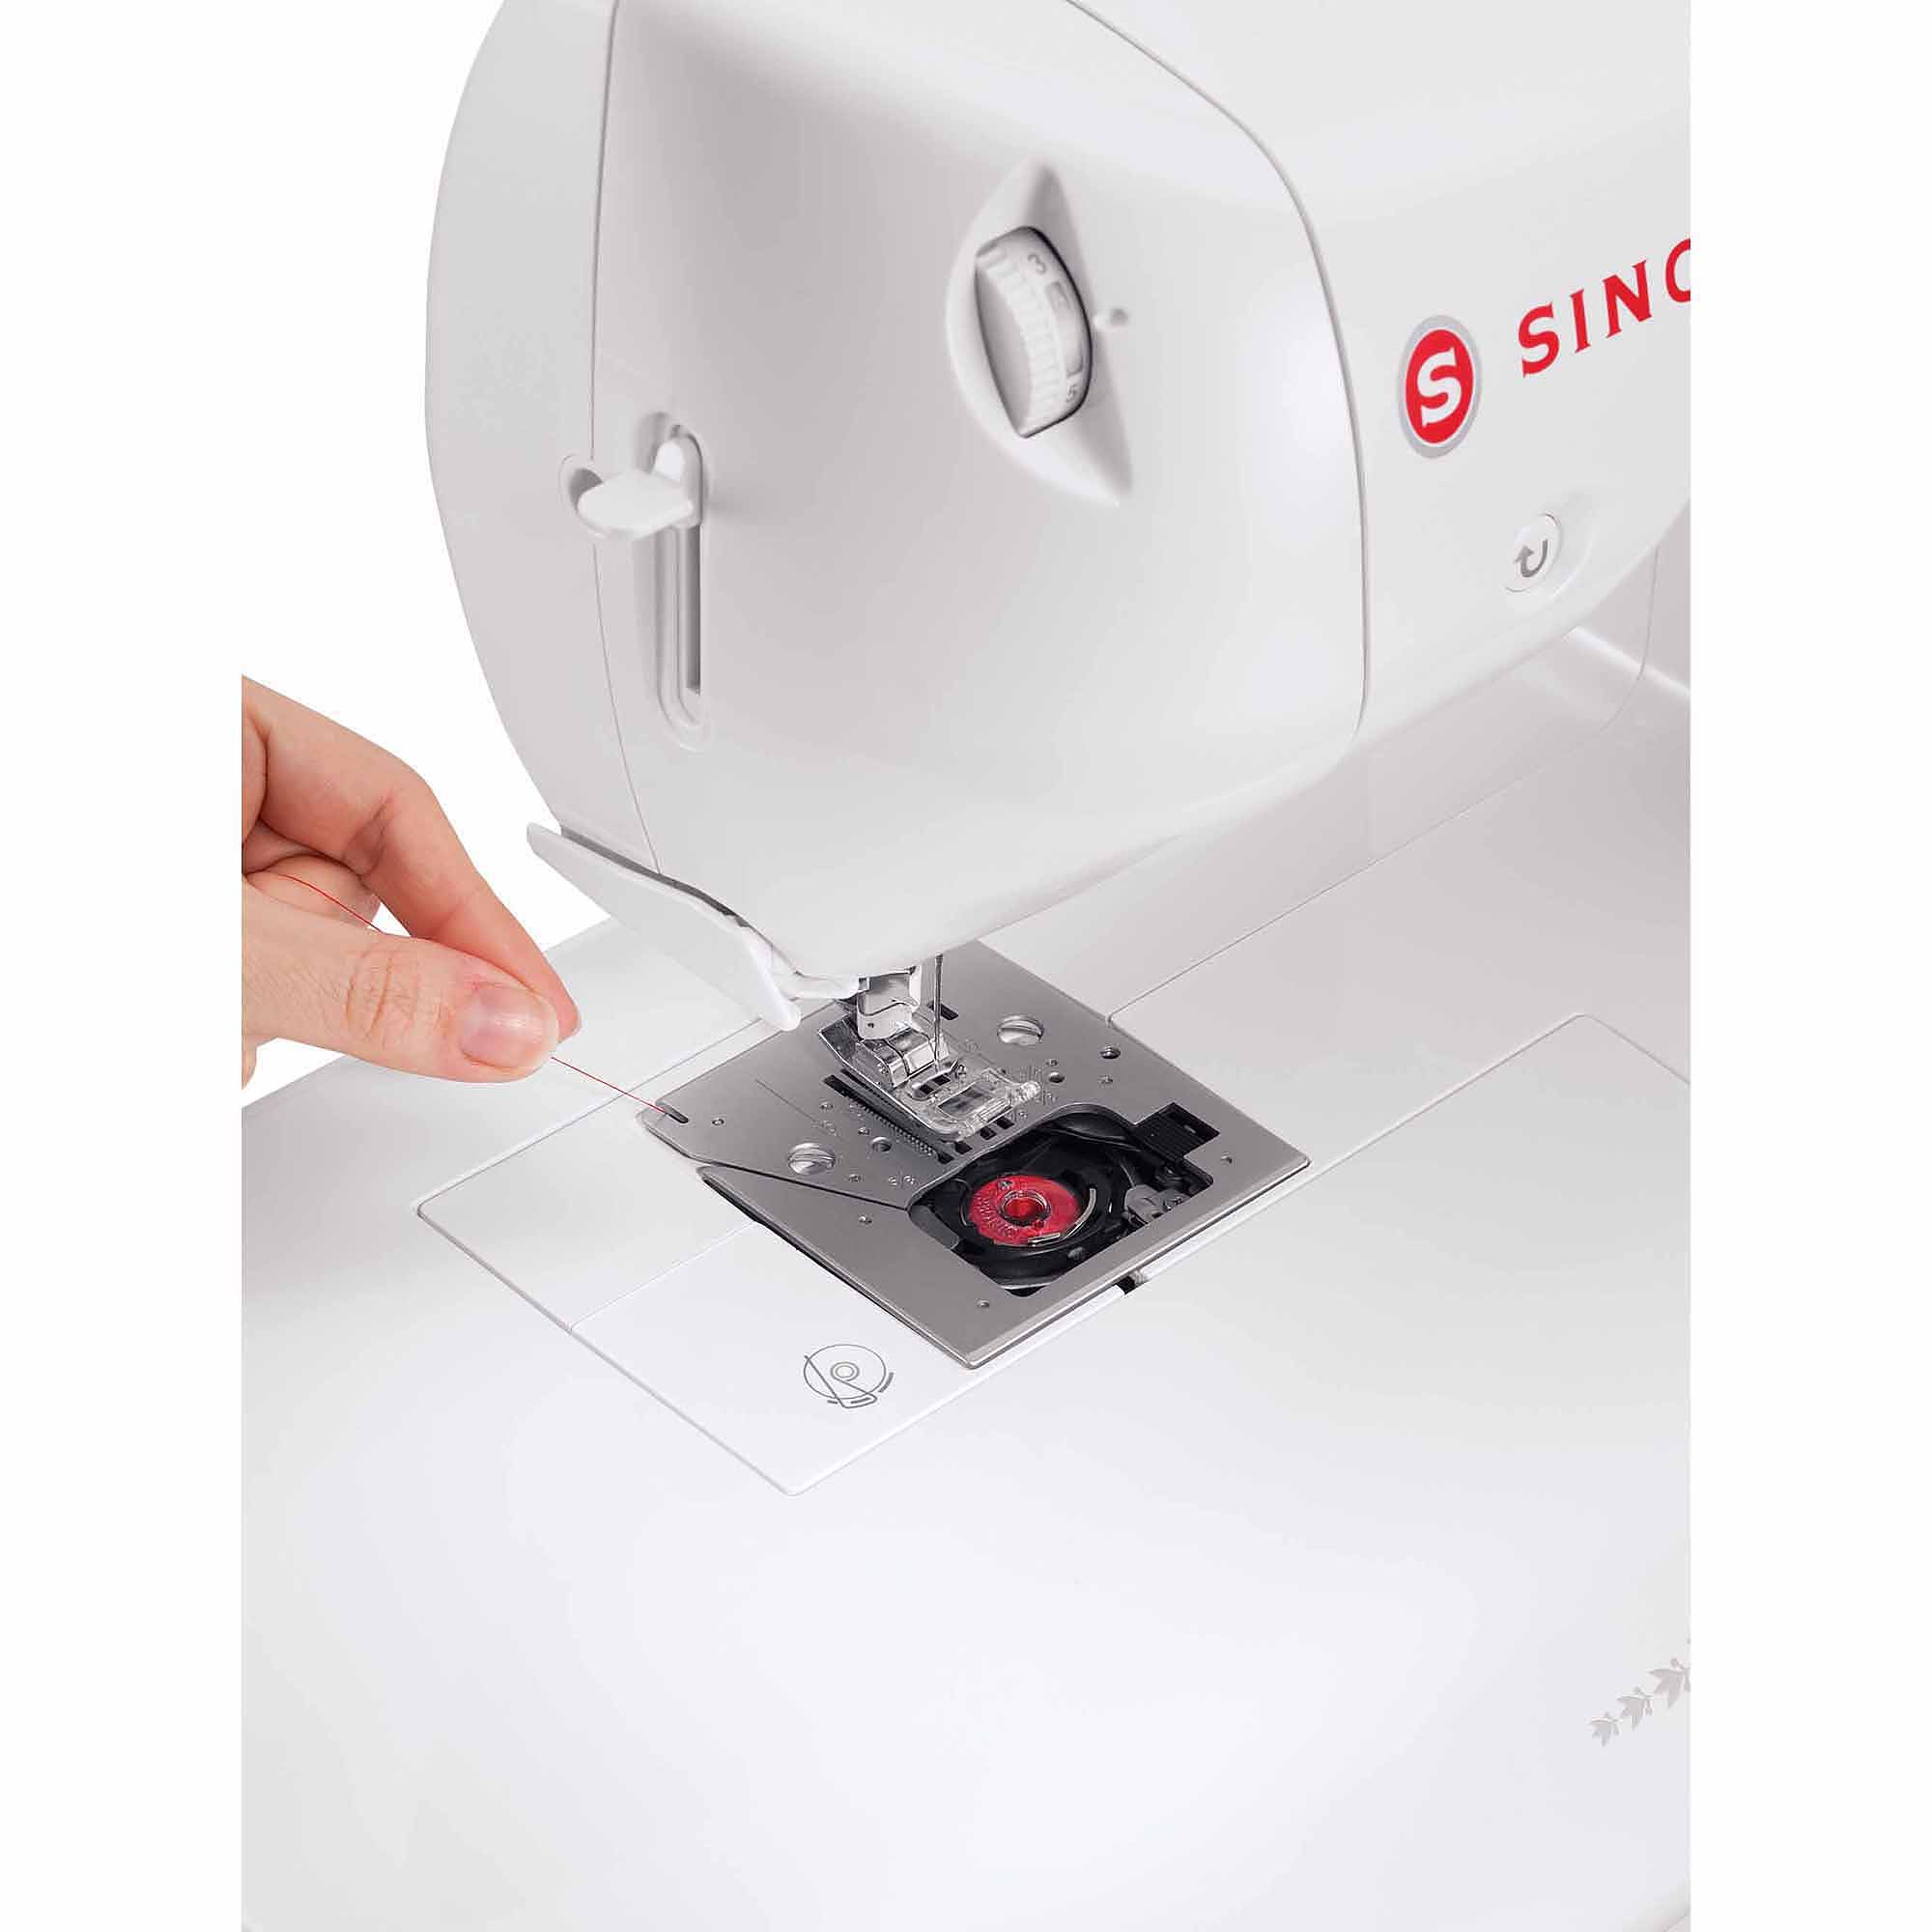 SINGER ® One 24-Stitch Sewing Machine - image 2 of 6